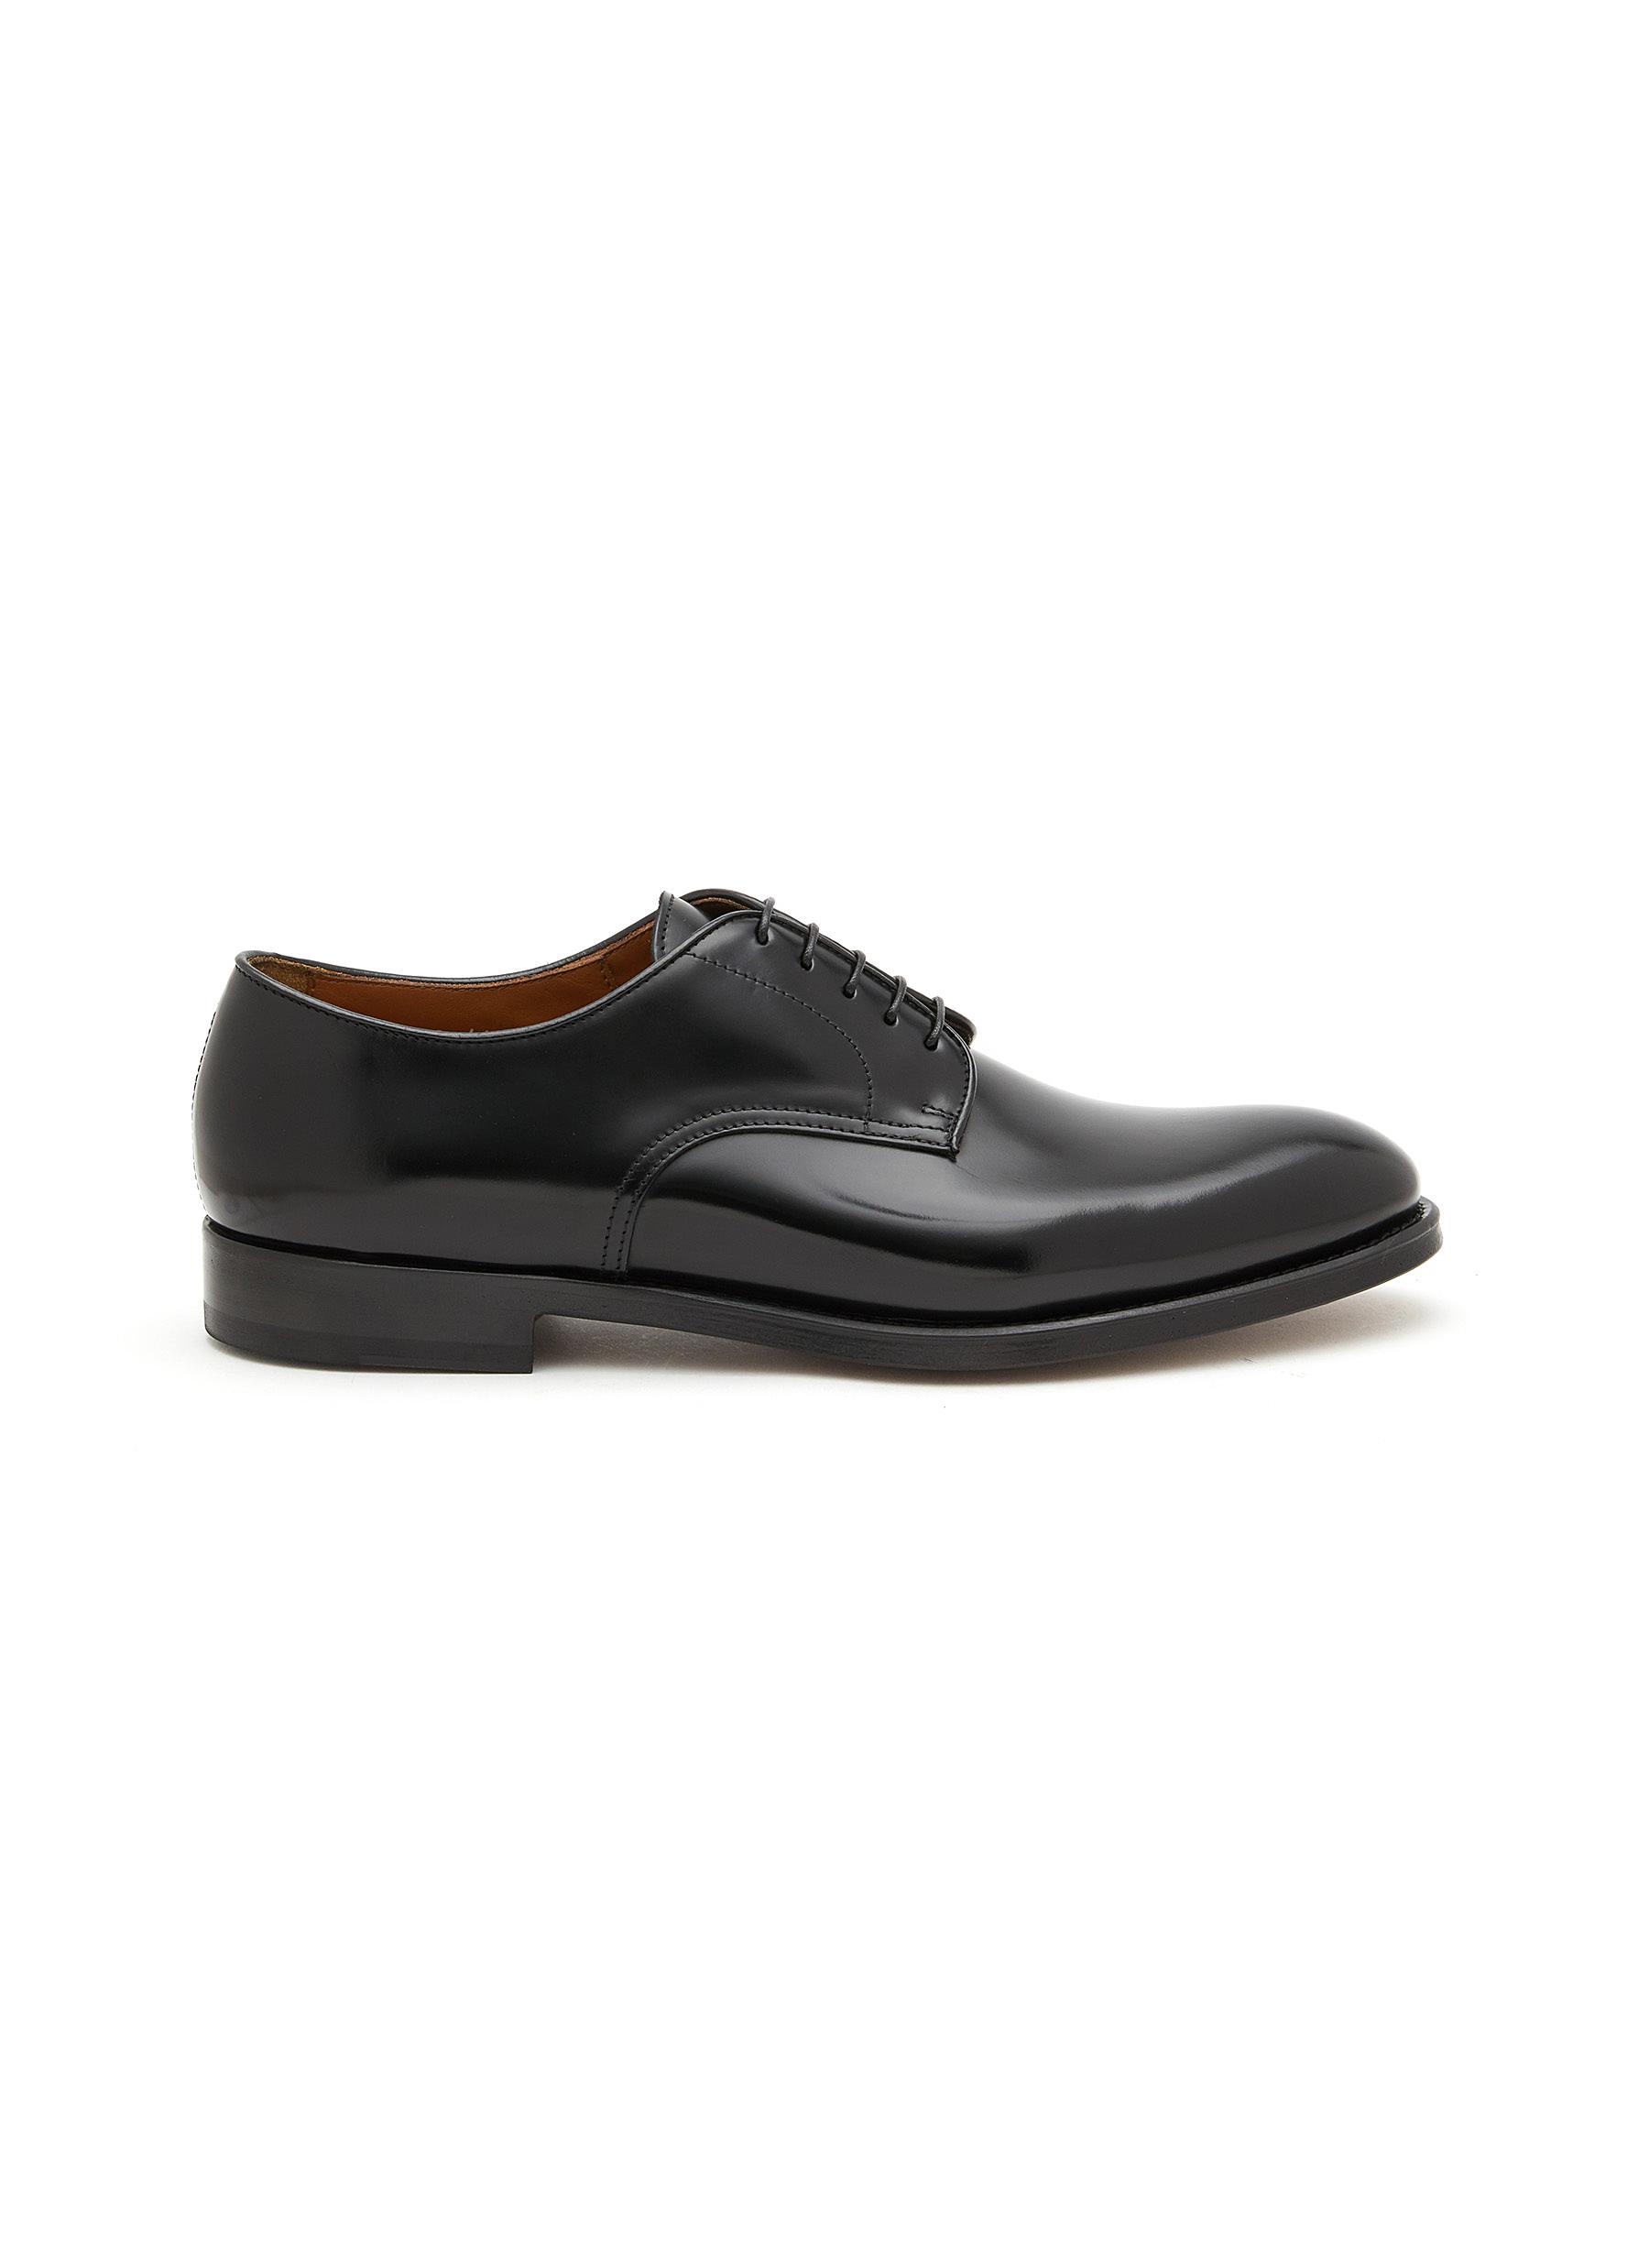 Giuseppe Zanotti Melithon Patent Leather Oxford Shoes - Farfetch